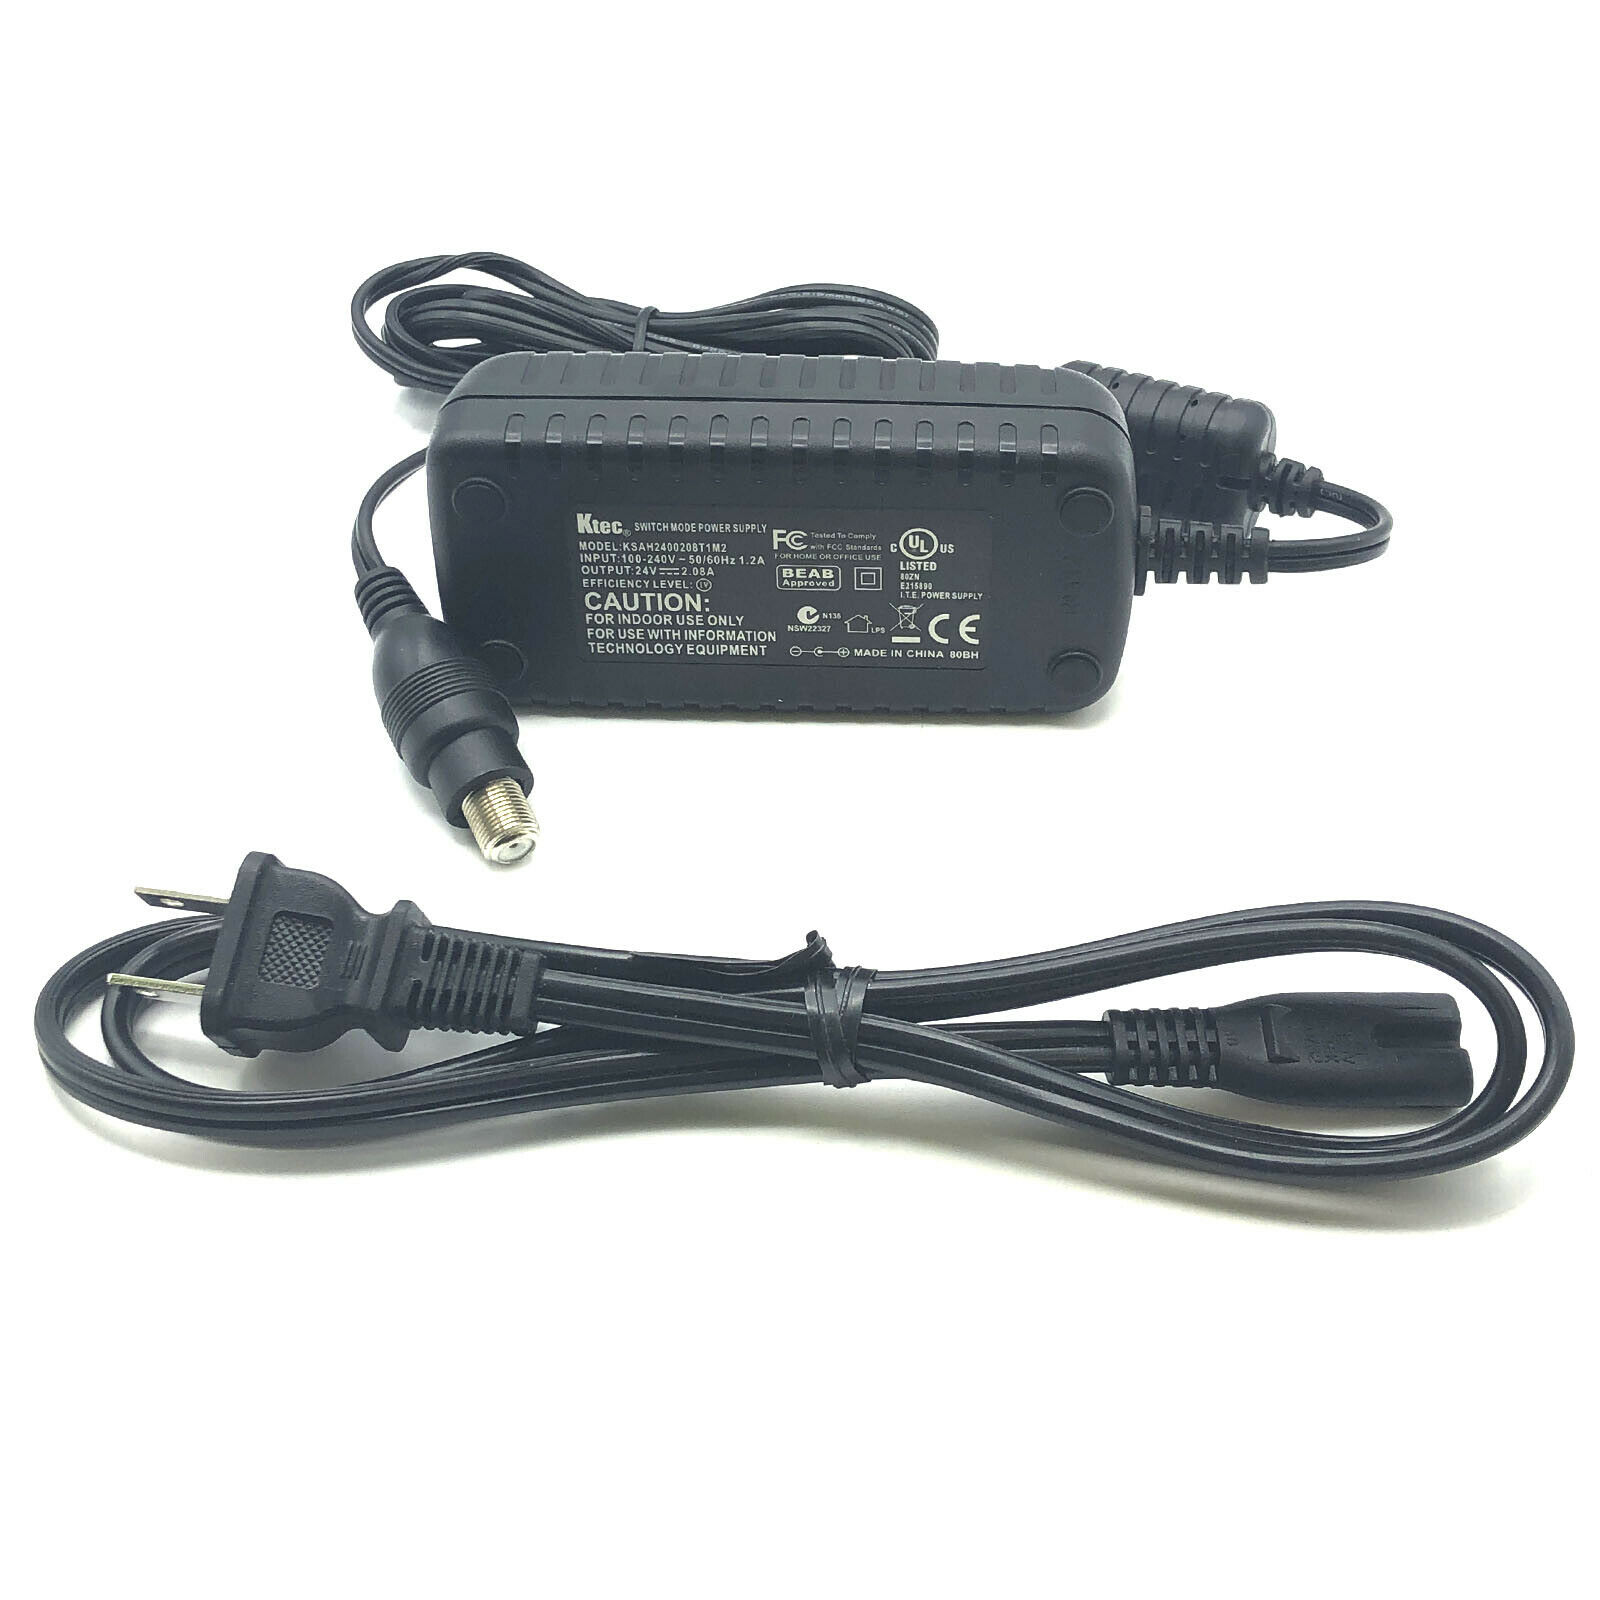 Genuine Ktec KSAH2400208T1M2 Switch Mode Power Supply Adapter 24V 2.08A w/PC Connection Split/Duplication: 1:1 Type: